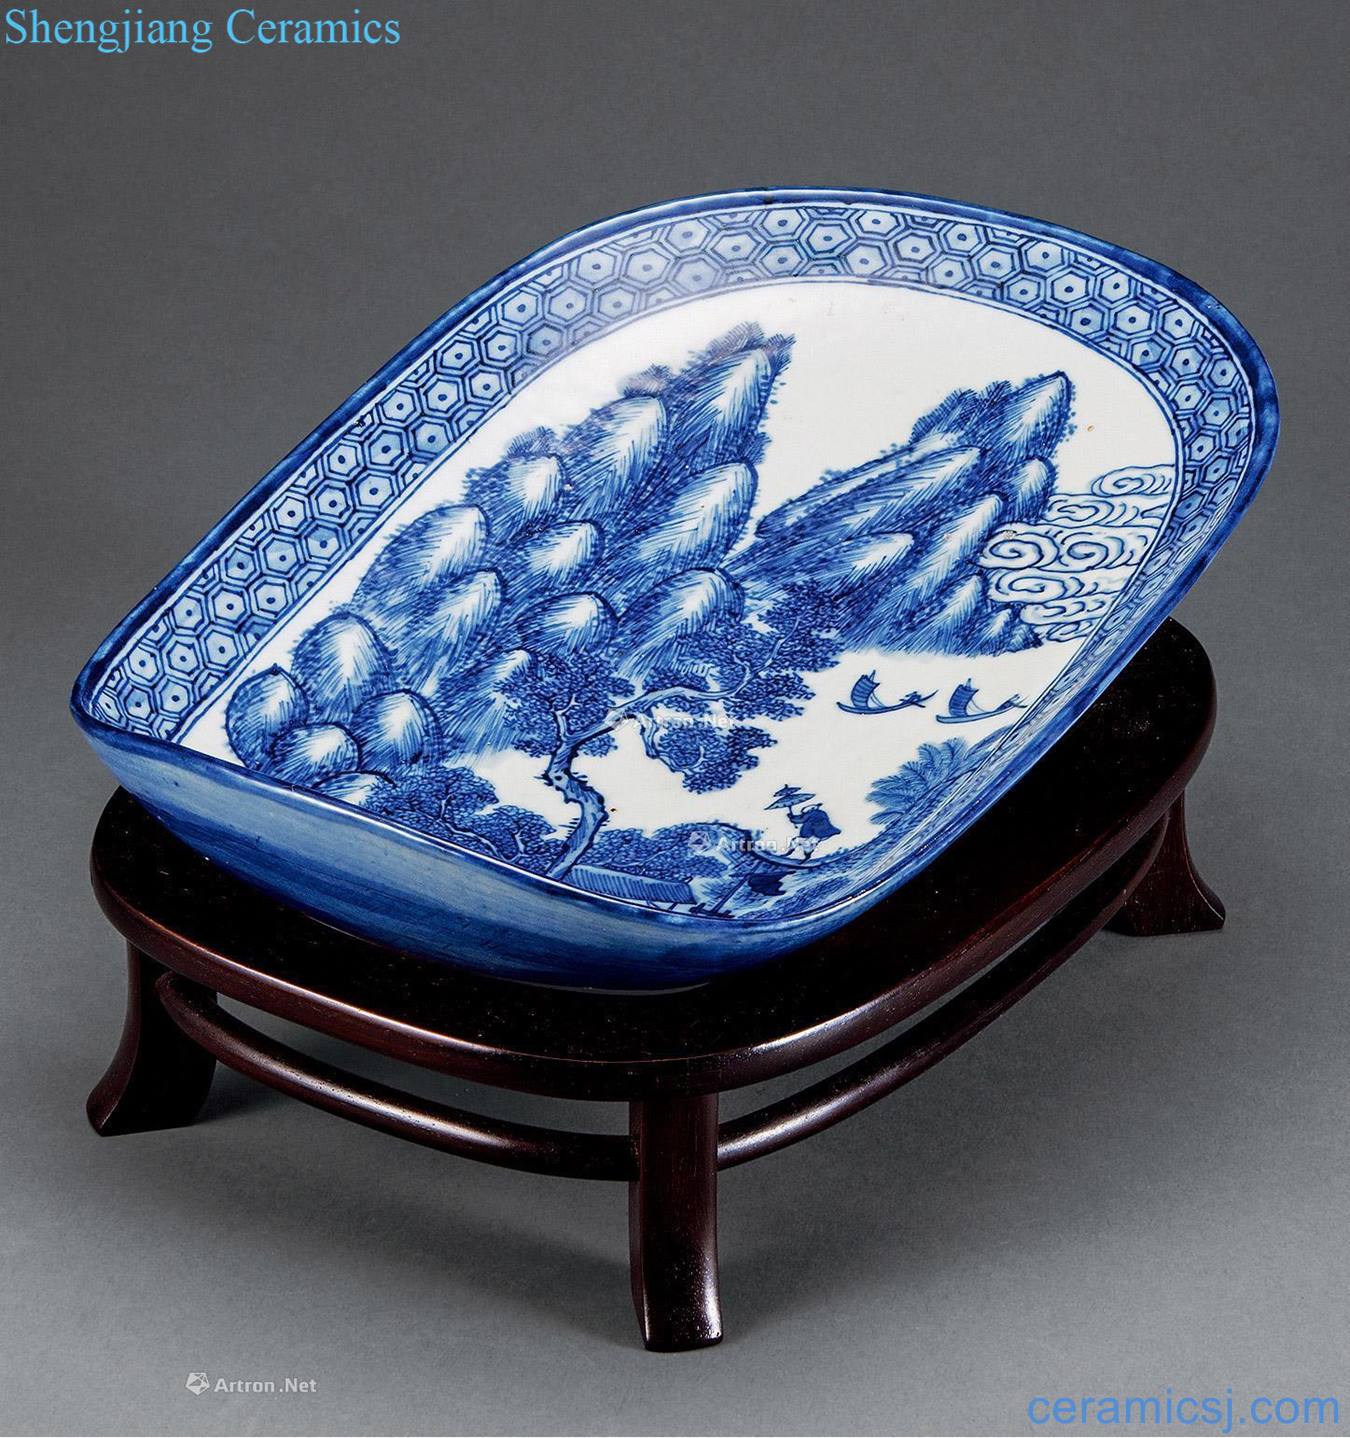 Landscape character wen qing porcelain bowl